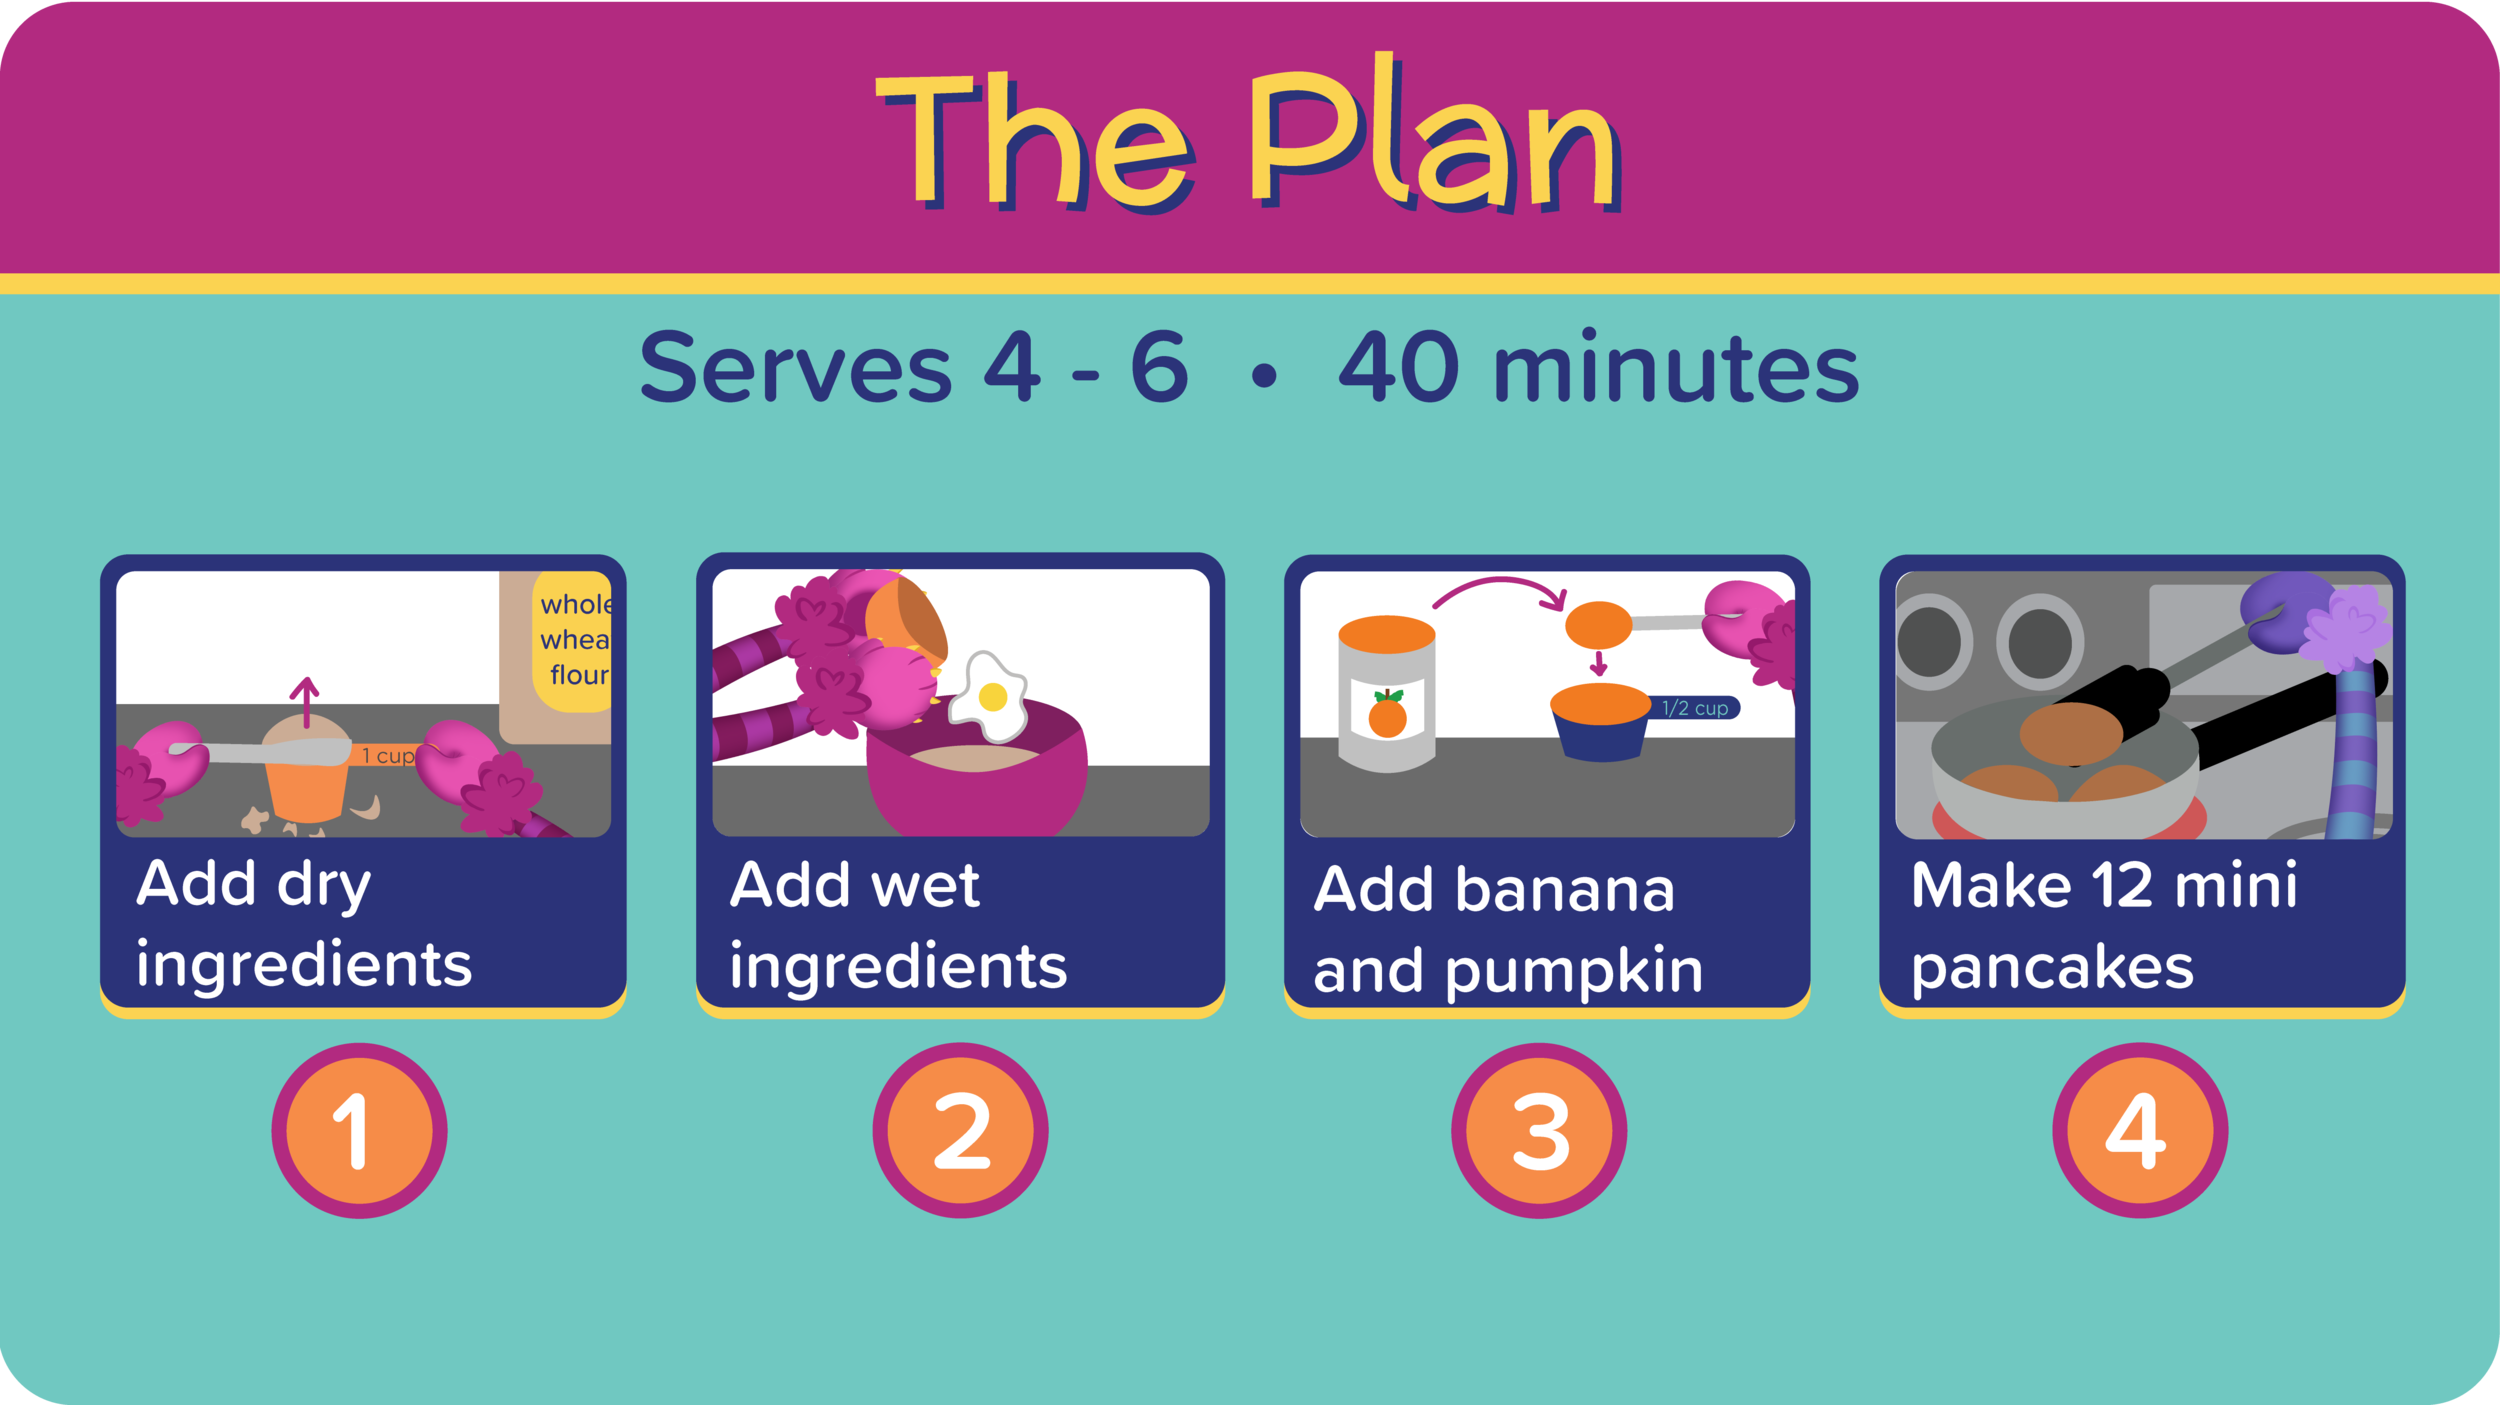 02_Banana Pumpkin Pancakes_The Plan-01.png